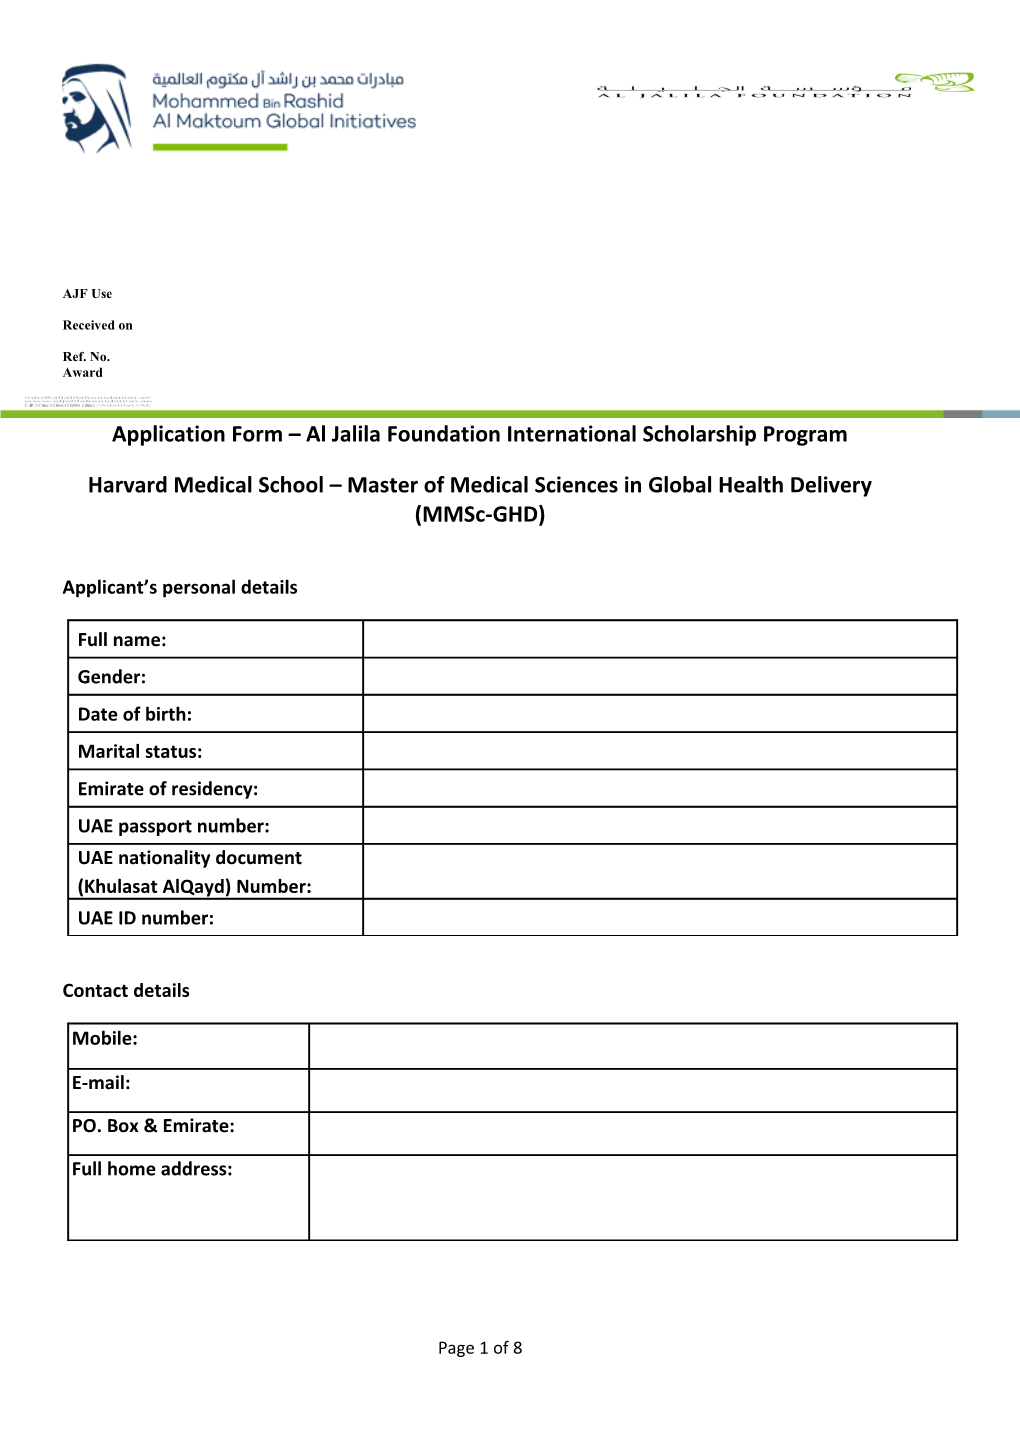 Application Form Al Jalila Foundation International Scholarship Program